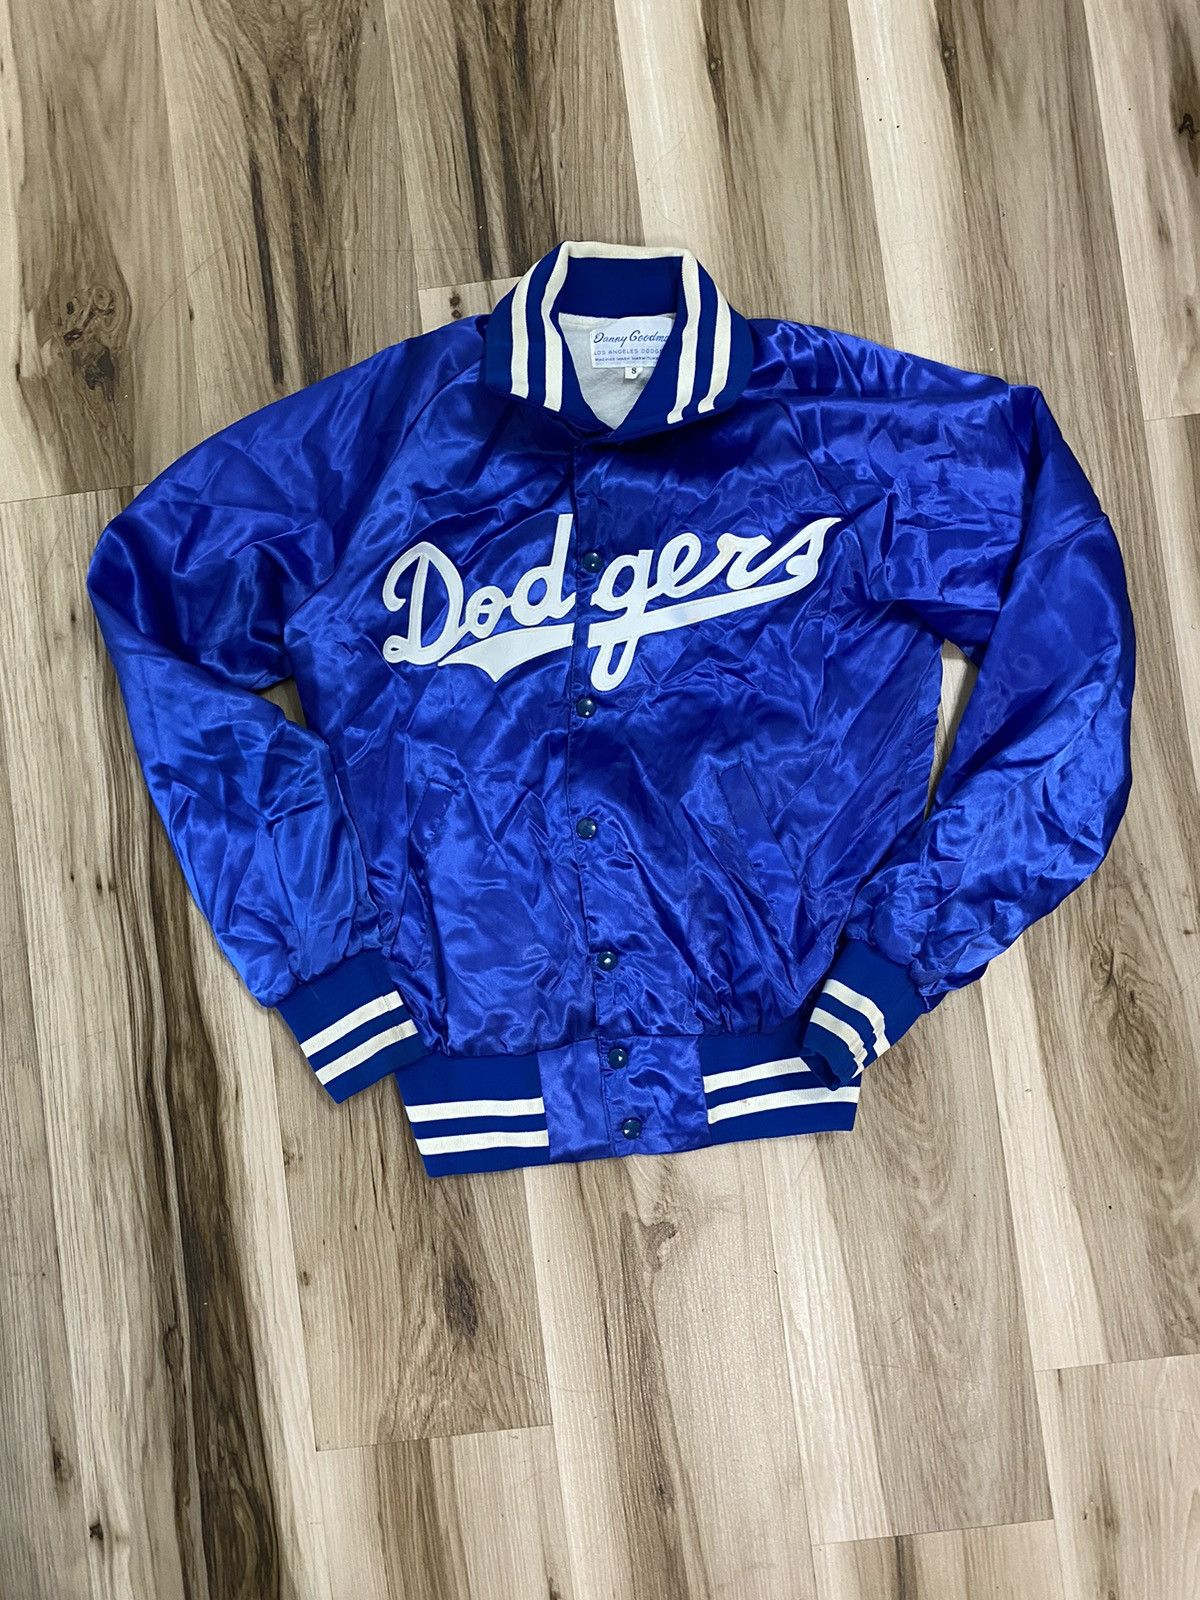 Vintage Varsity dodgers jacket x street wear | Grailed